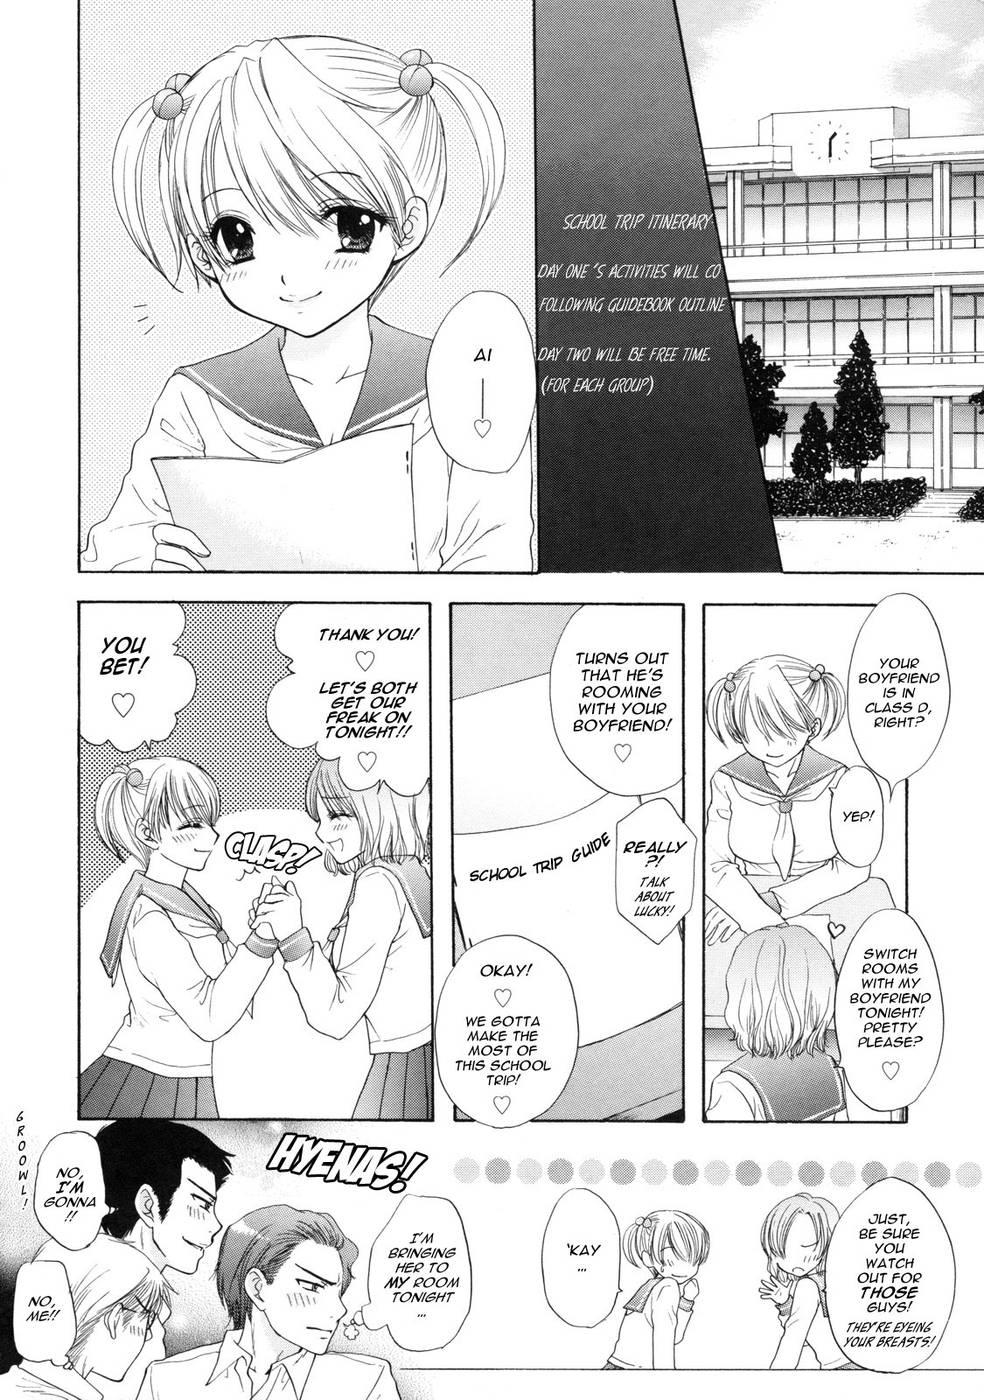 Hentai Manga Comic-The Great Escape-Chapter 9-2